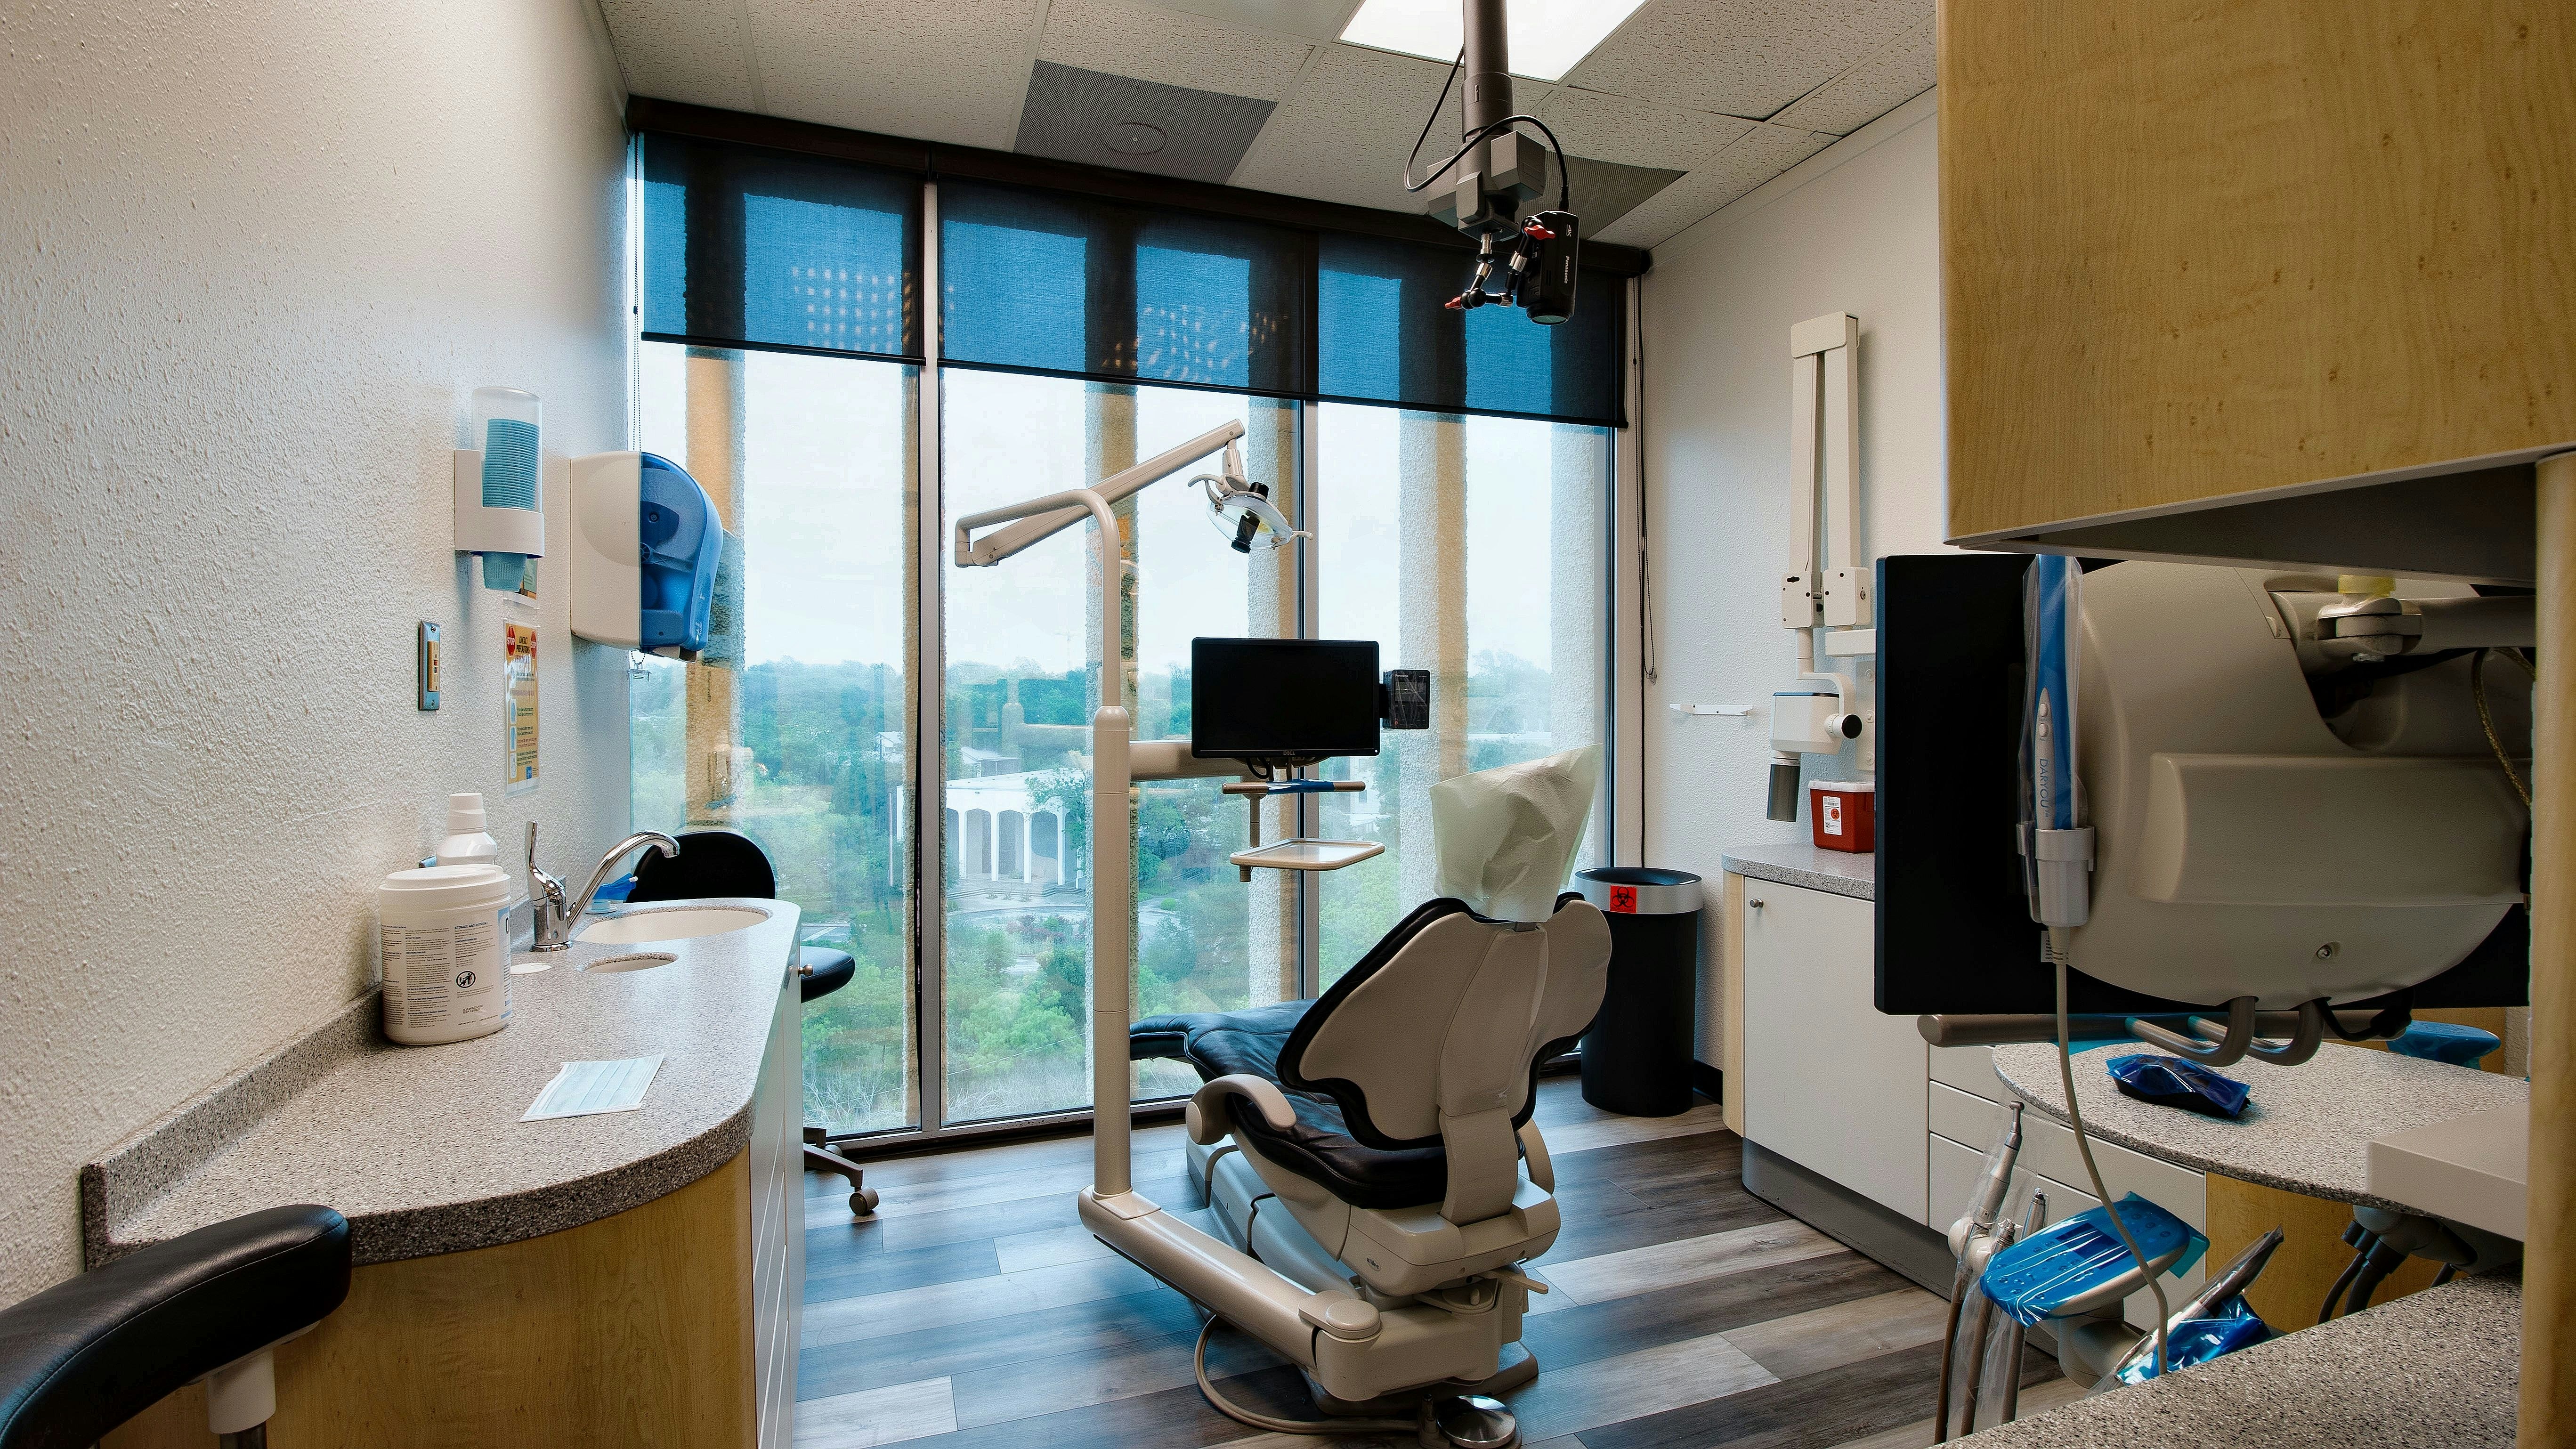 Interior of 38th Street Dental | Austin, TX